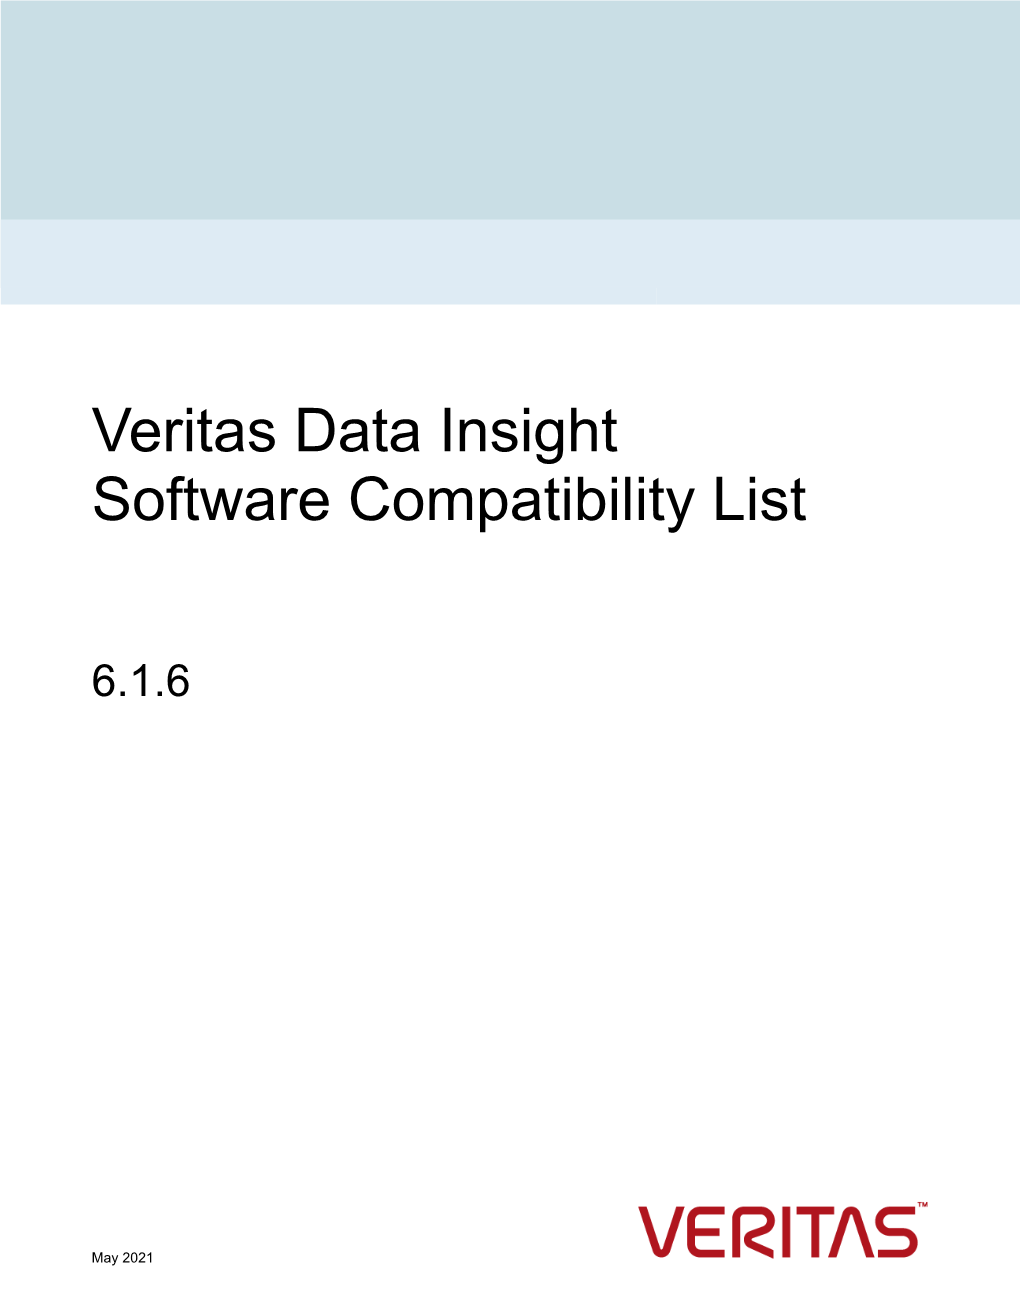 Veritas Data Insight Software Compatibility List